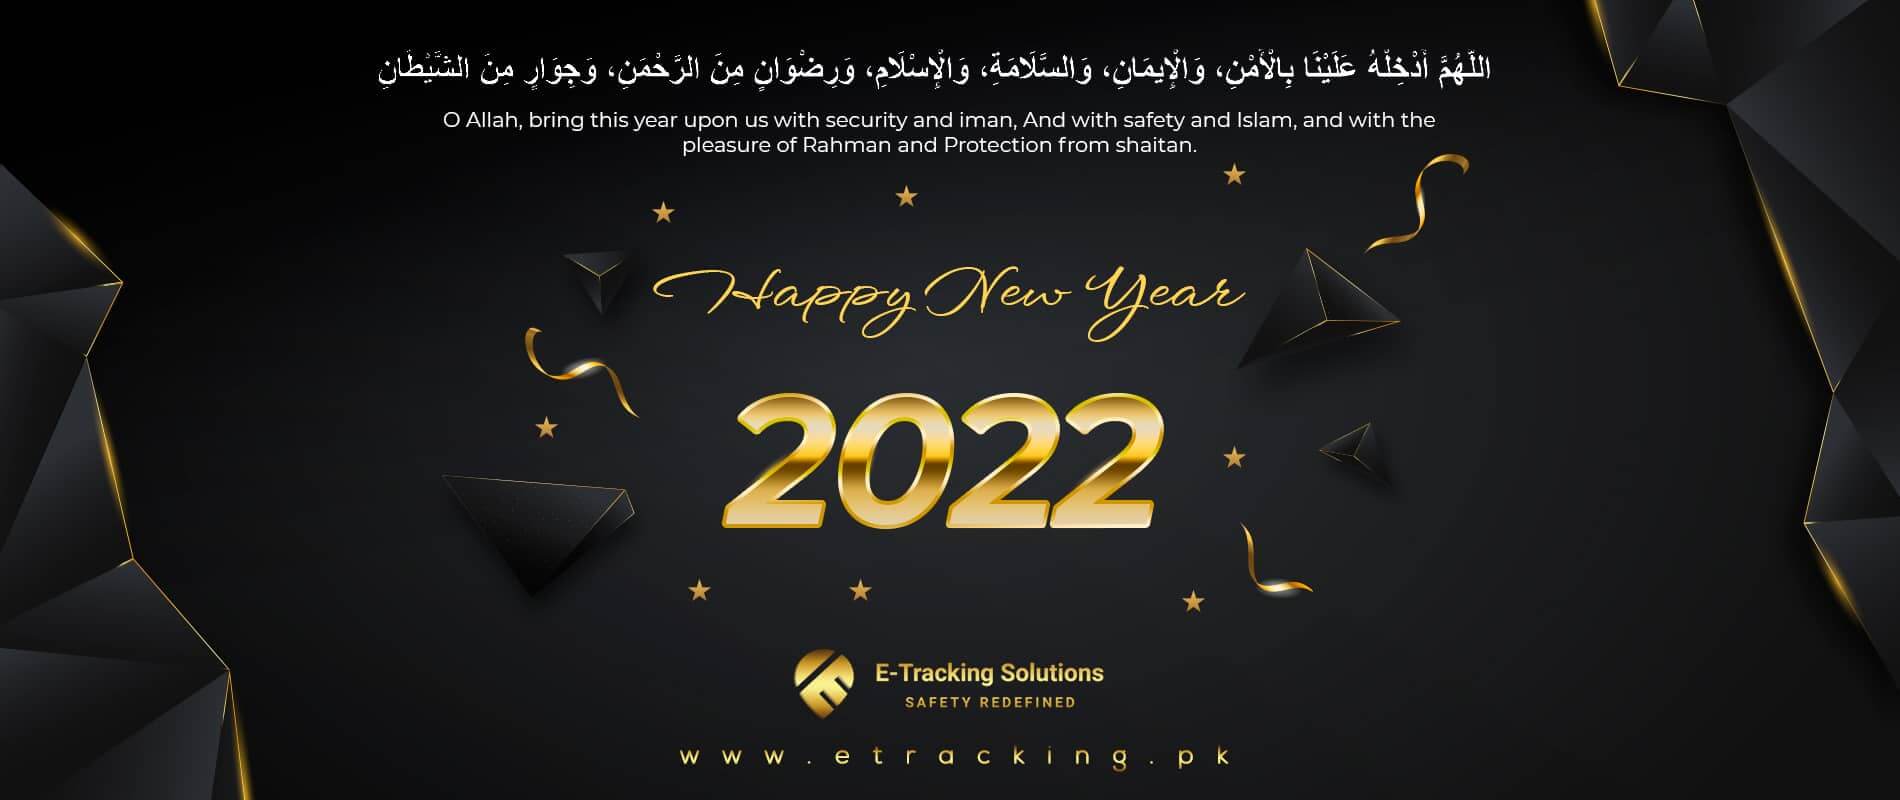 etracking-pk-new-year-2022-pakistan-tiny